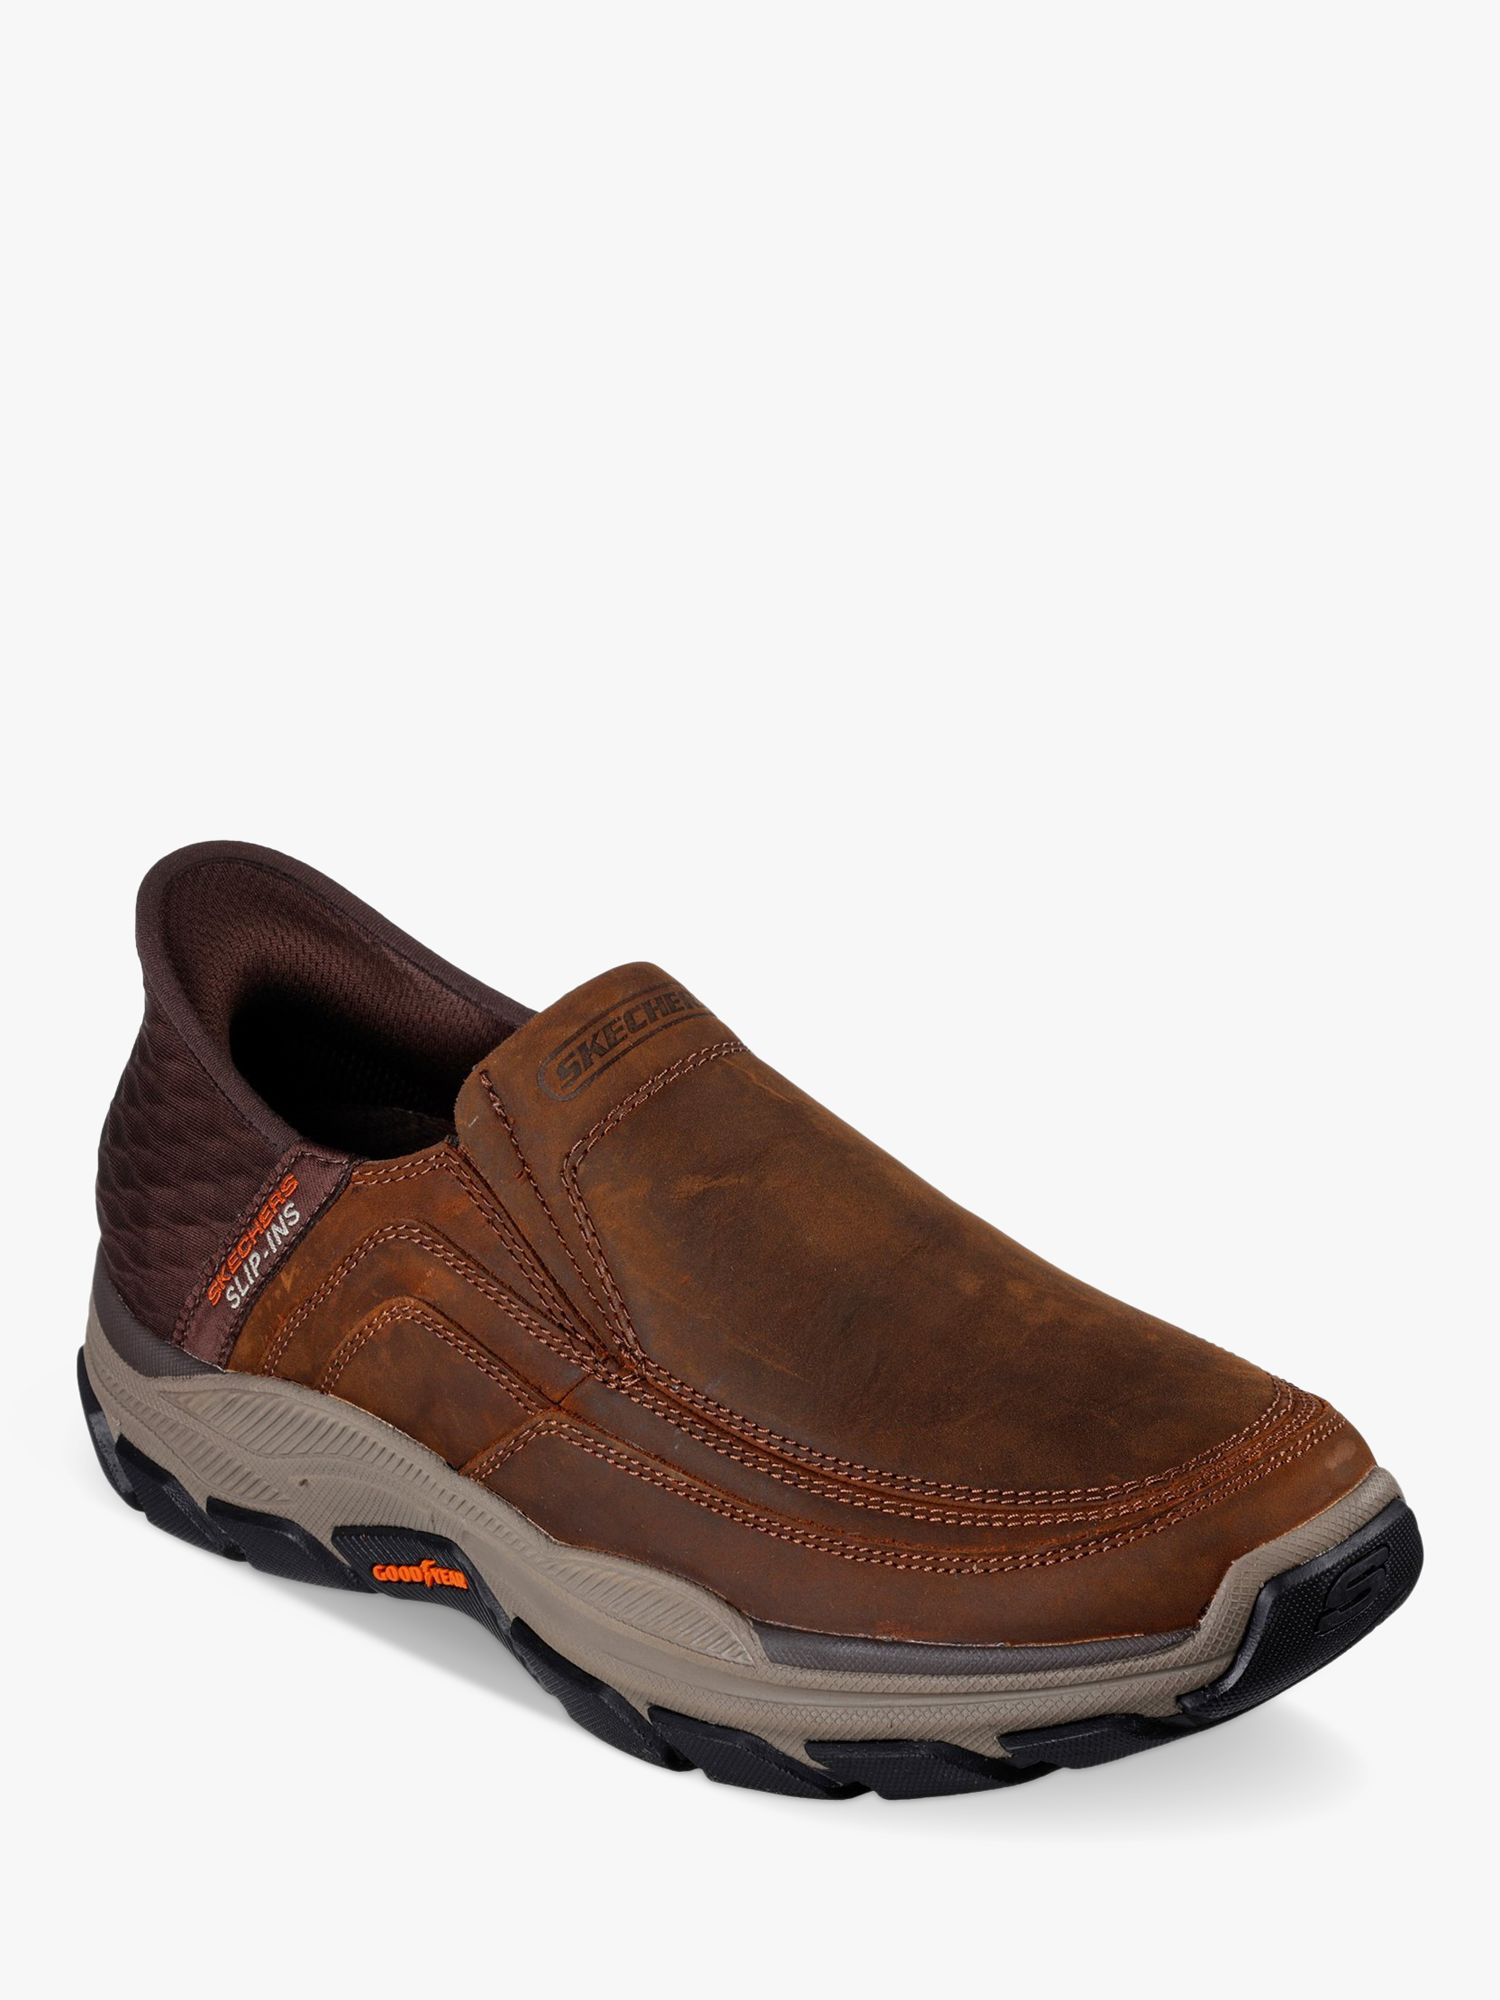 Skechers Respected Elgin Slip-On Shoes, Dark Brown, 6